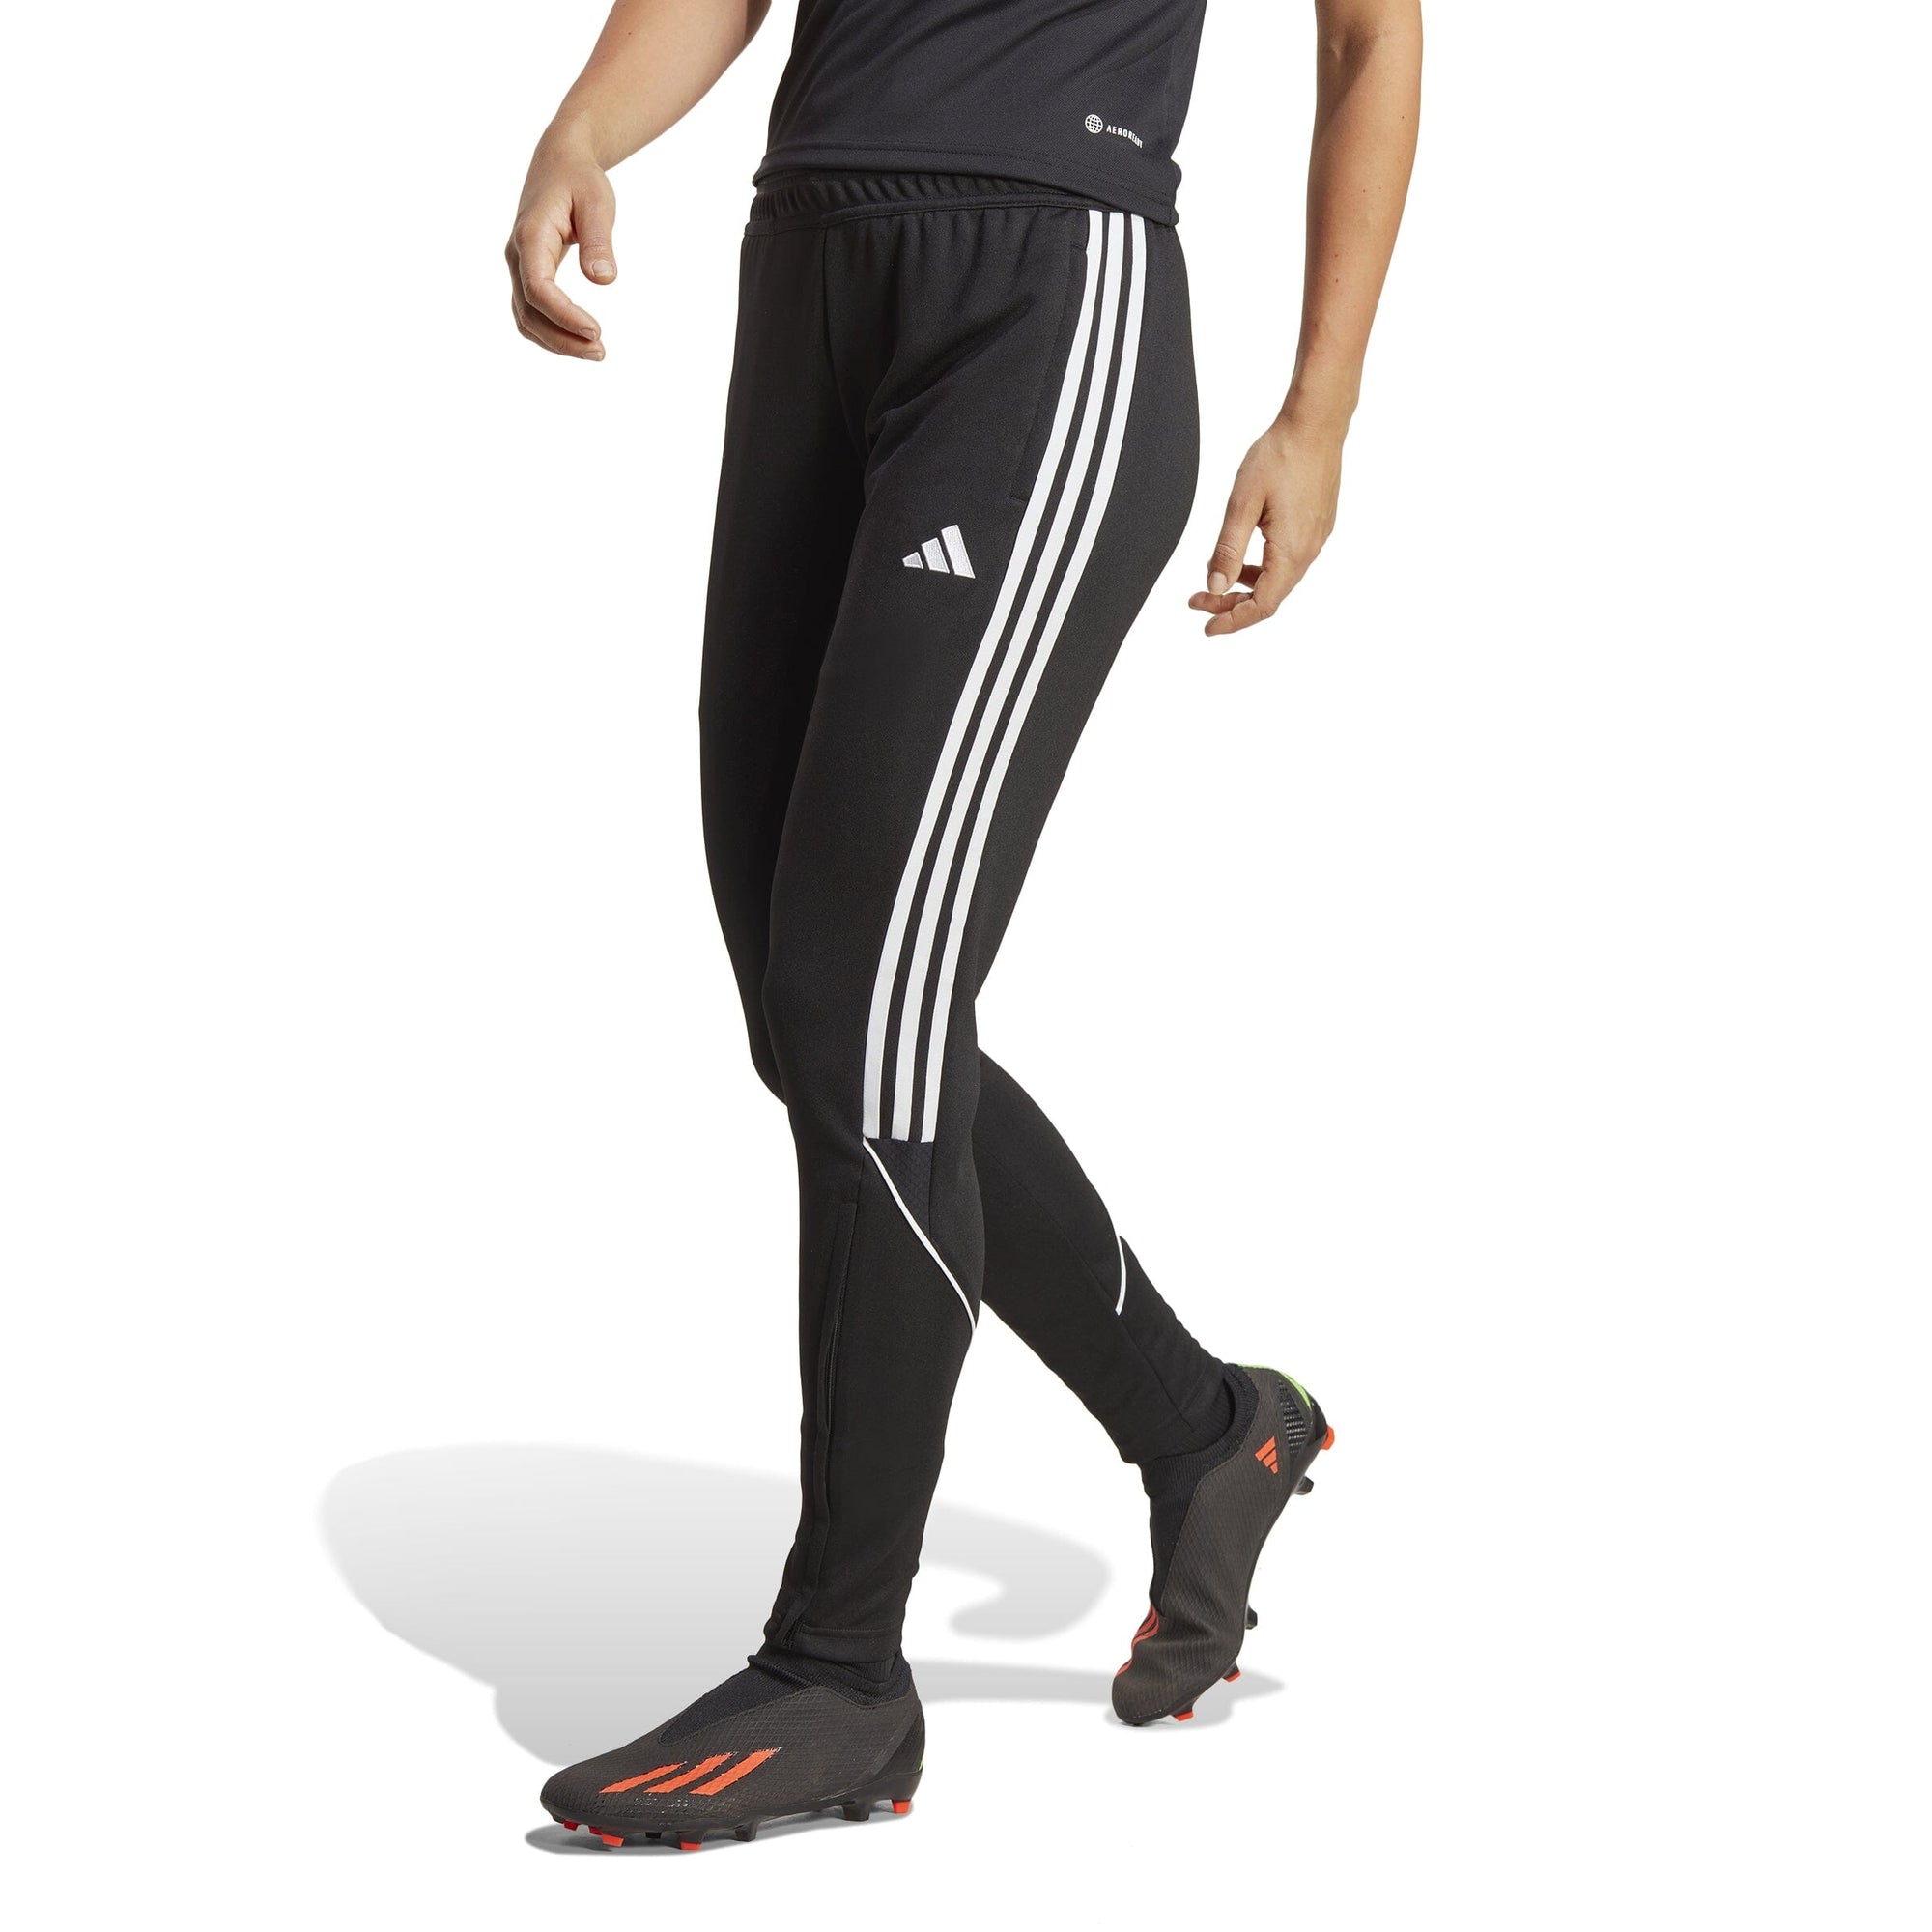 adidas Women's Core 15 Training Pants, Black/White, X-Large at Amazon  Women's Clothing store